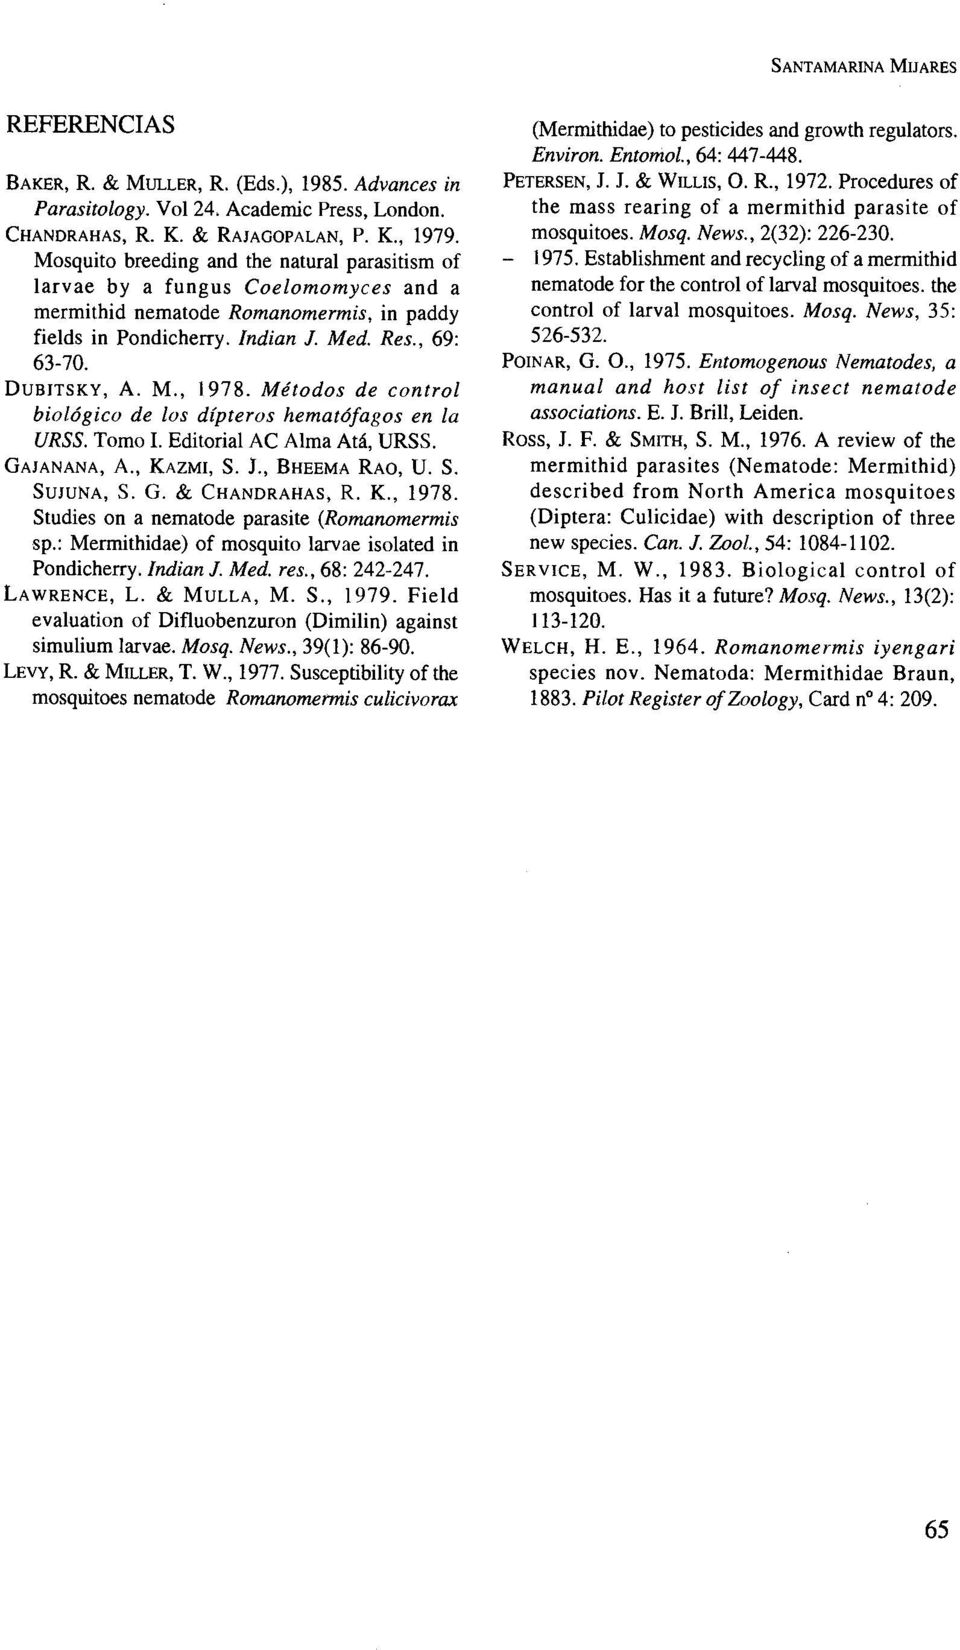 Métodos de control biológico de los dípteros hematófagos en la URSS. Tomo 1. Editorial AC Alma Atá, URSS. GAJANANA, A., KAZMI, S. J., BHEEMA RAO, U. S. SUJUNA, S. G. & CHANDRAHAS, R. K., 1978.